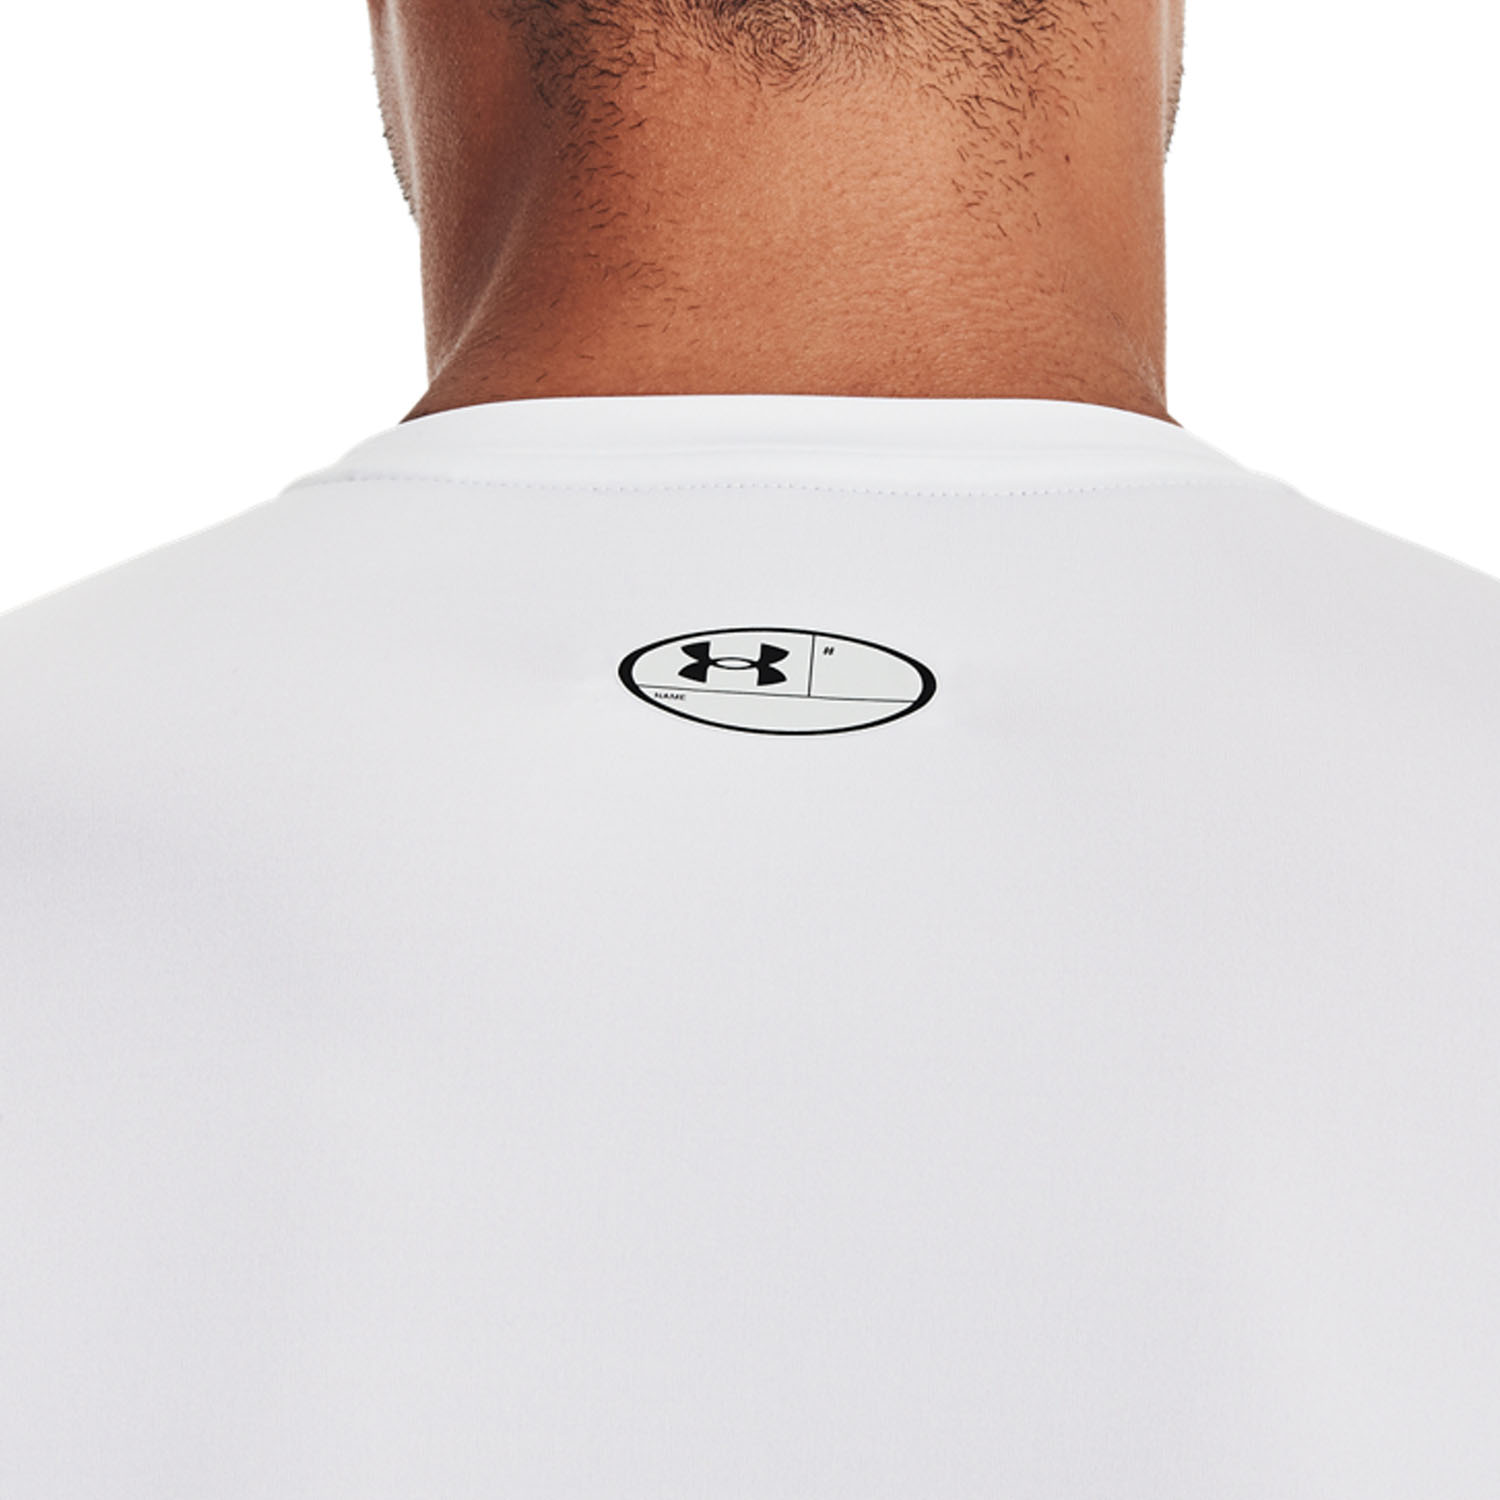 Under Armour HeatGear Compression Camisa - White/Black